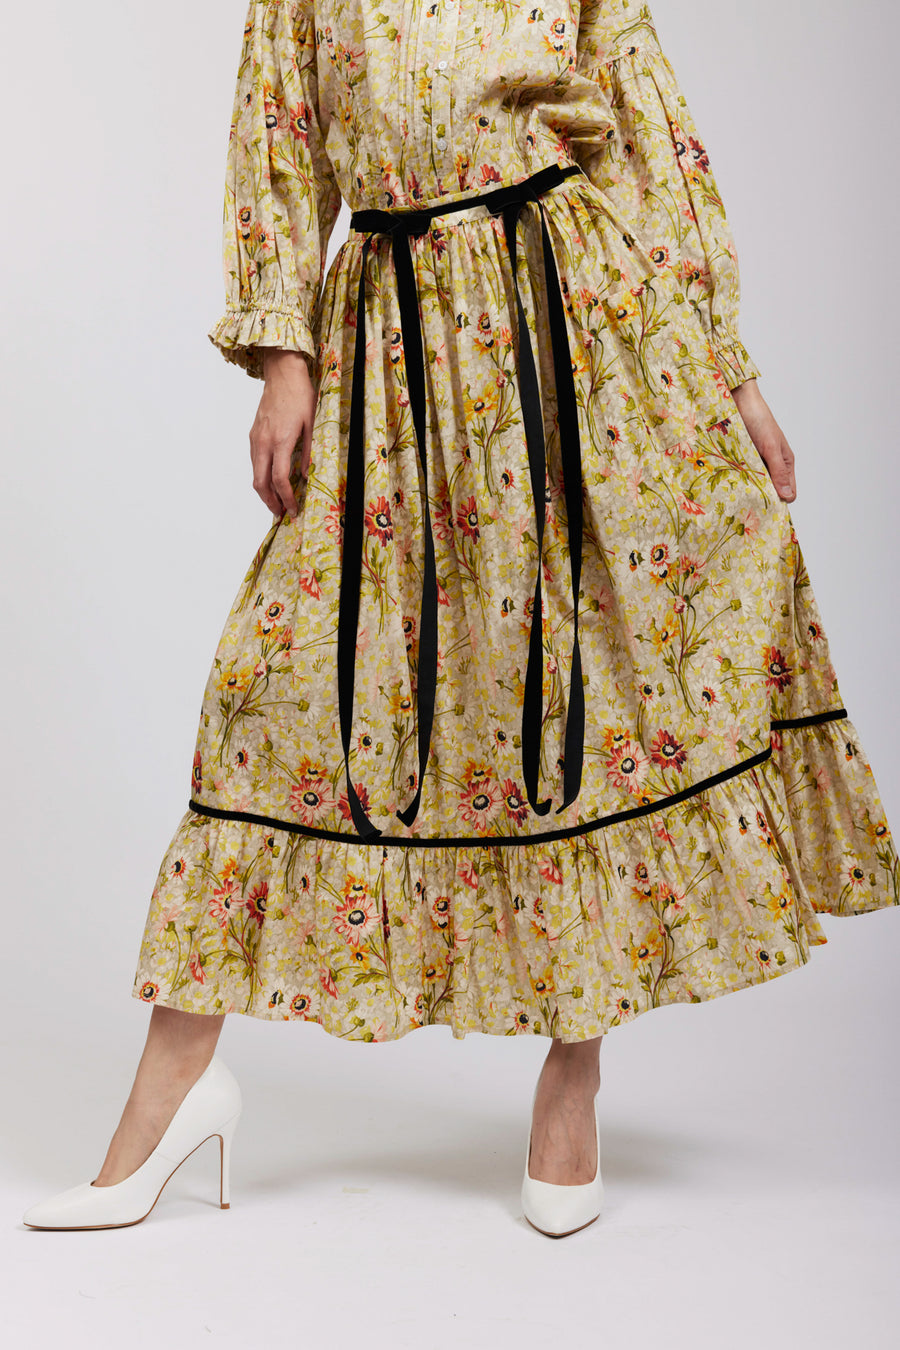 BATSHEVA - Laura Ashley x Batsheva Kipp Skirt in Witton Floral